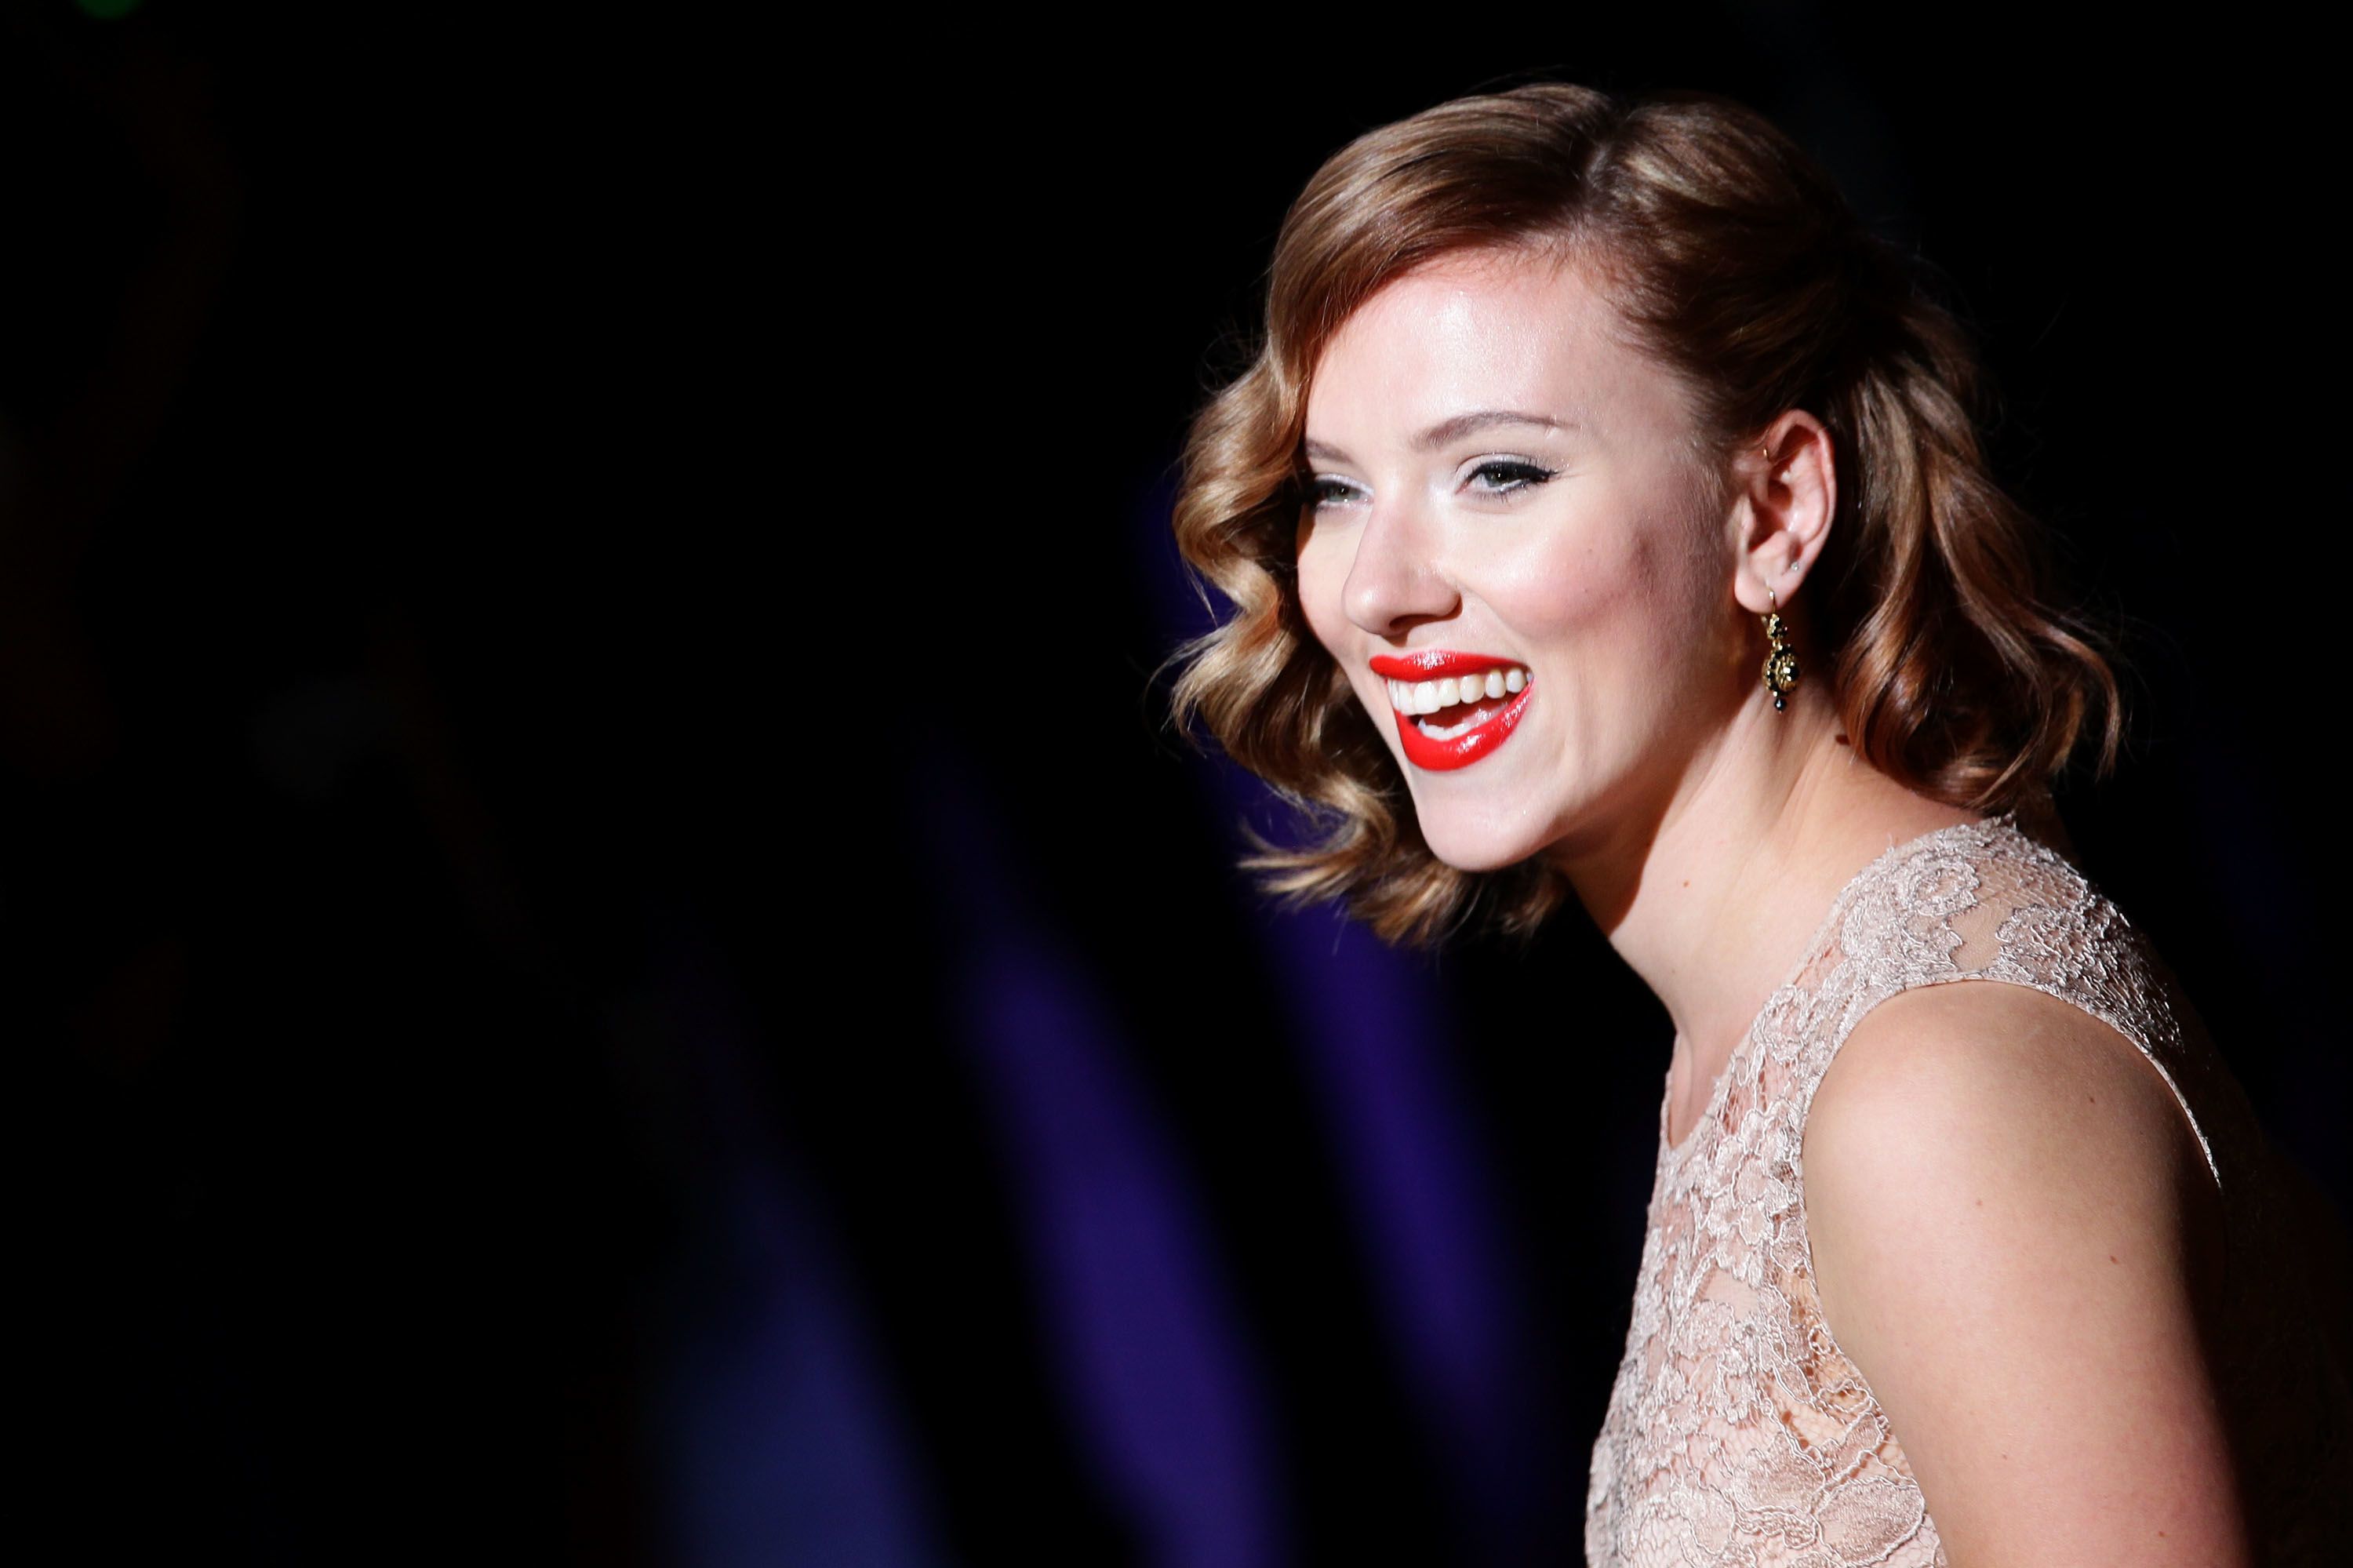 Scarlett Johansson: I Was Groomed to Be Blonde Bombshell Actor